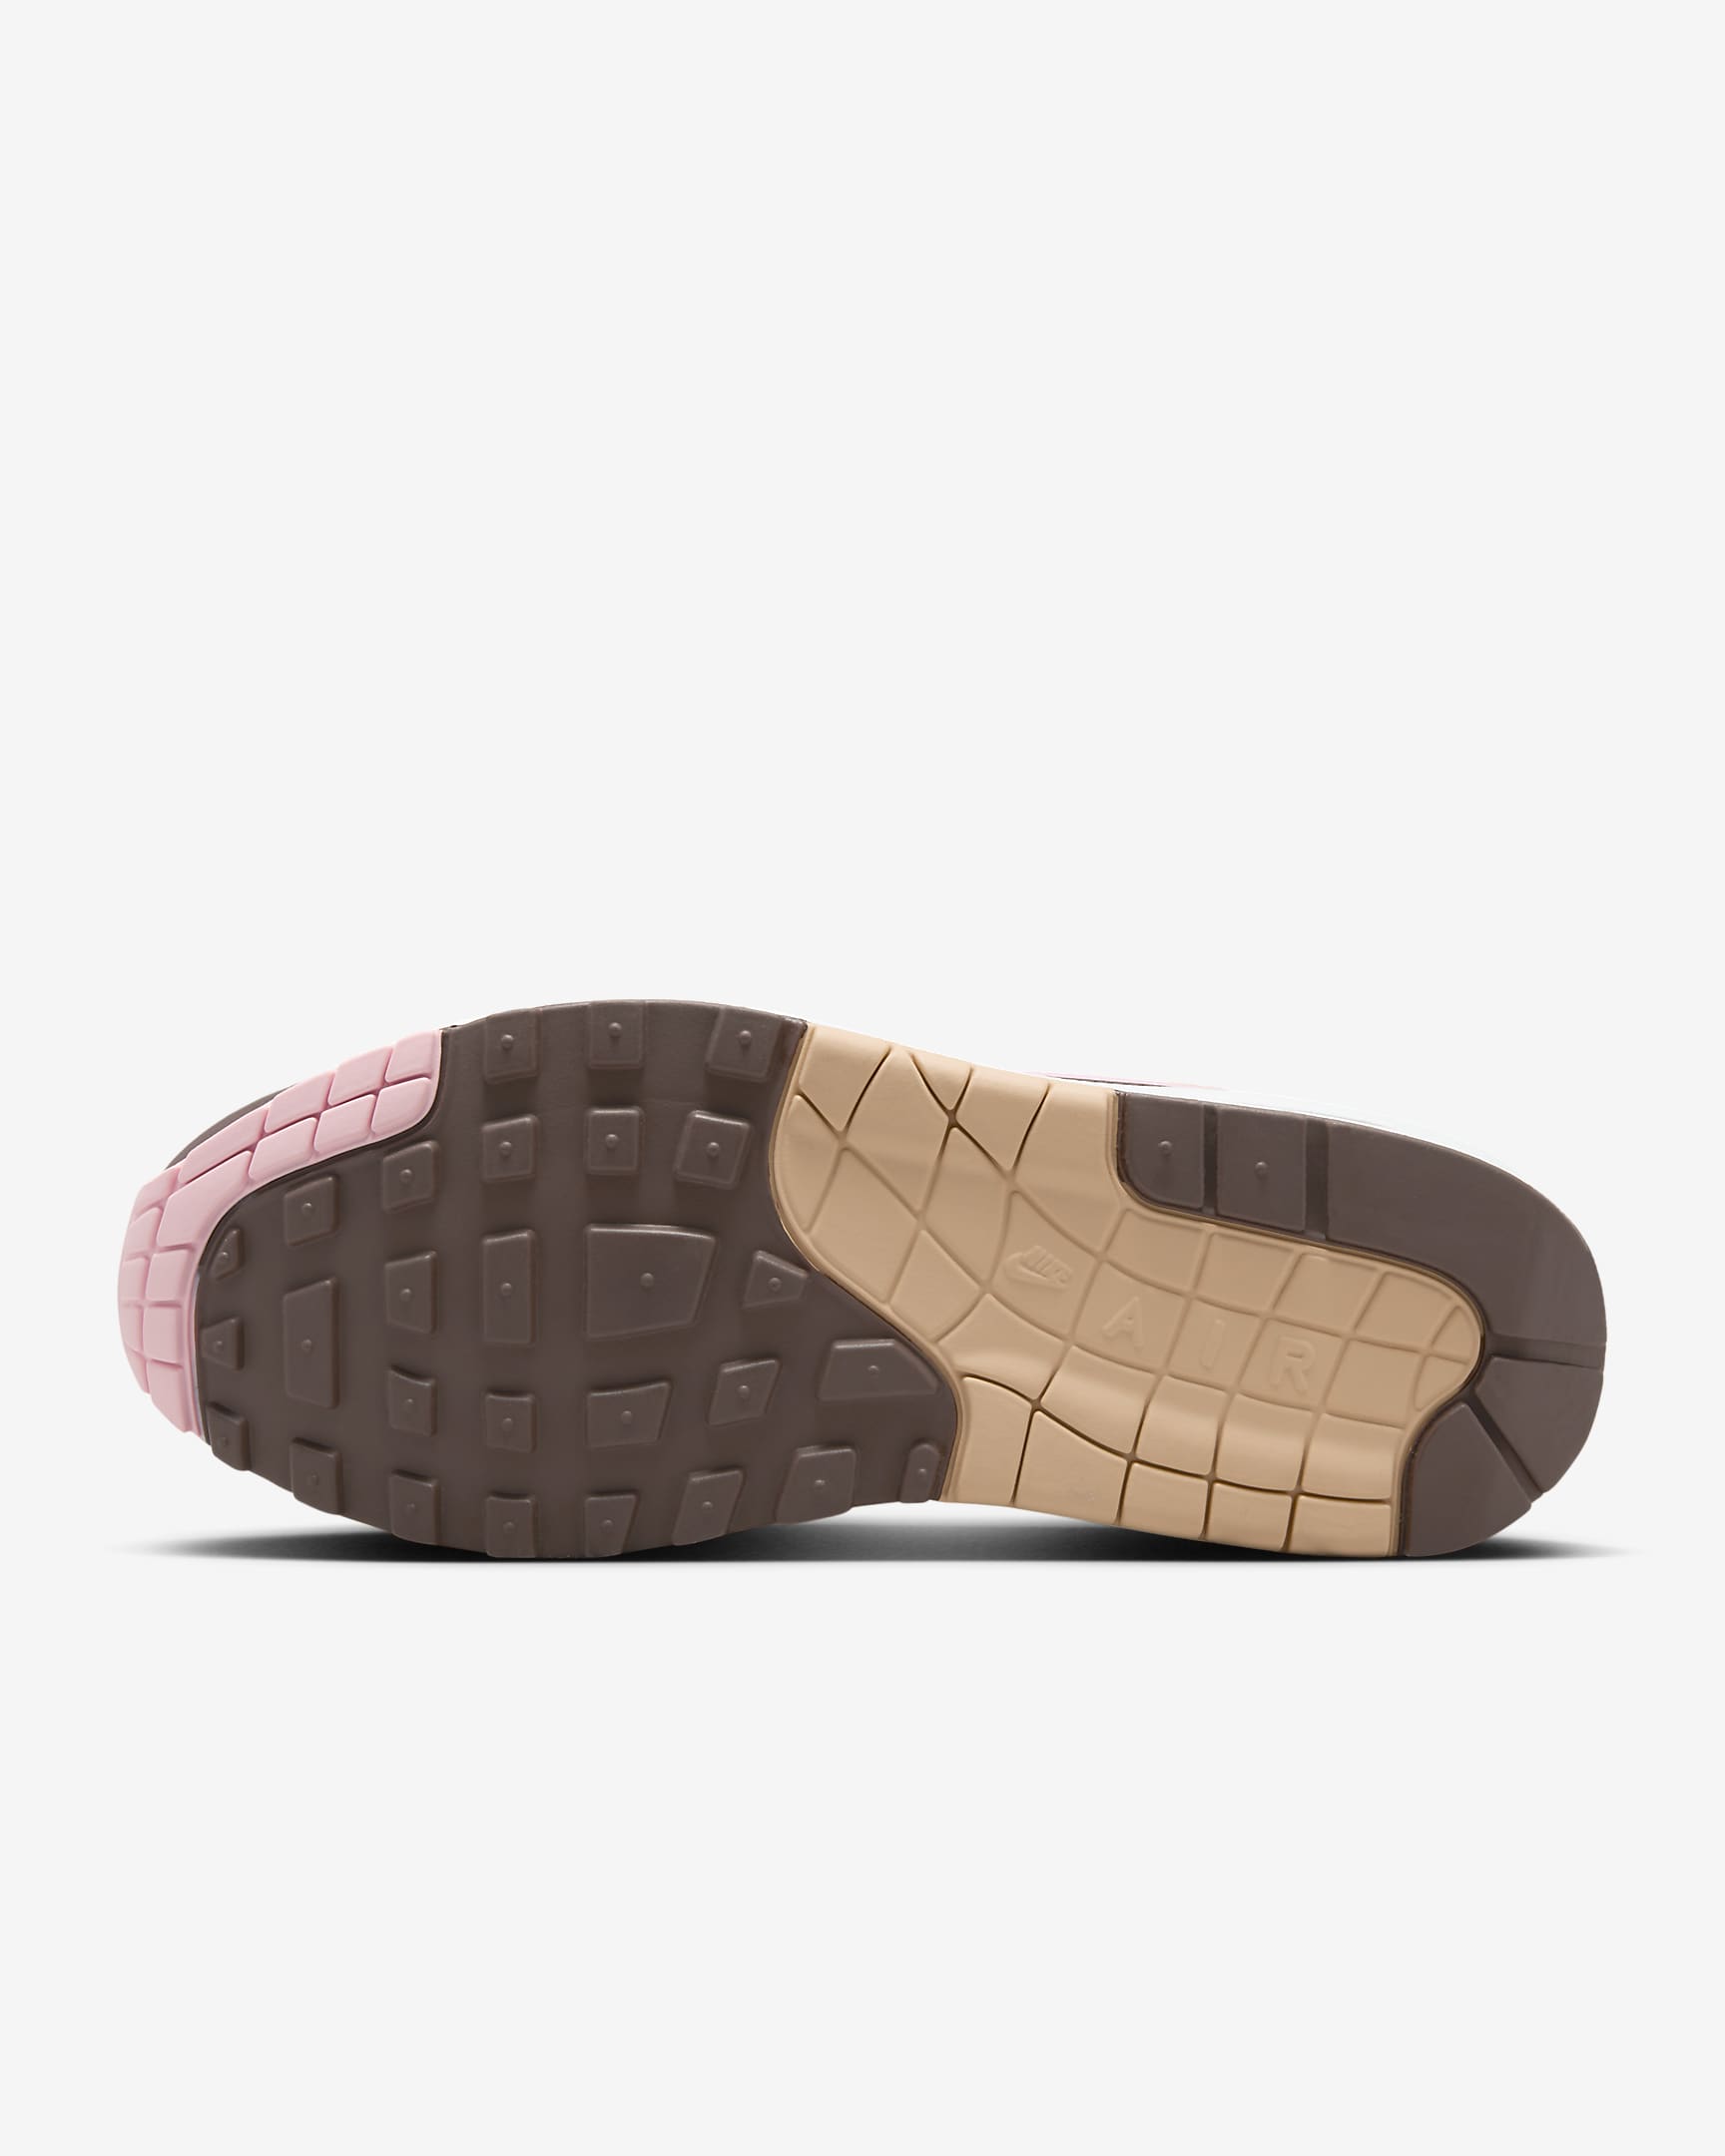 Nike Air Max 1 '87 Women's Shoes - Sesame/Coconut Milk/Baroque Brown/Medium Soft Pink